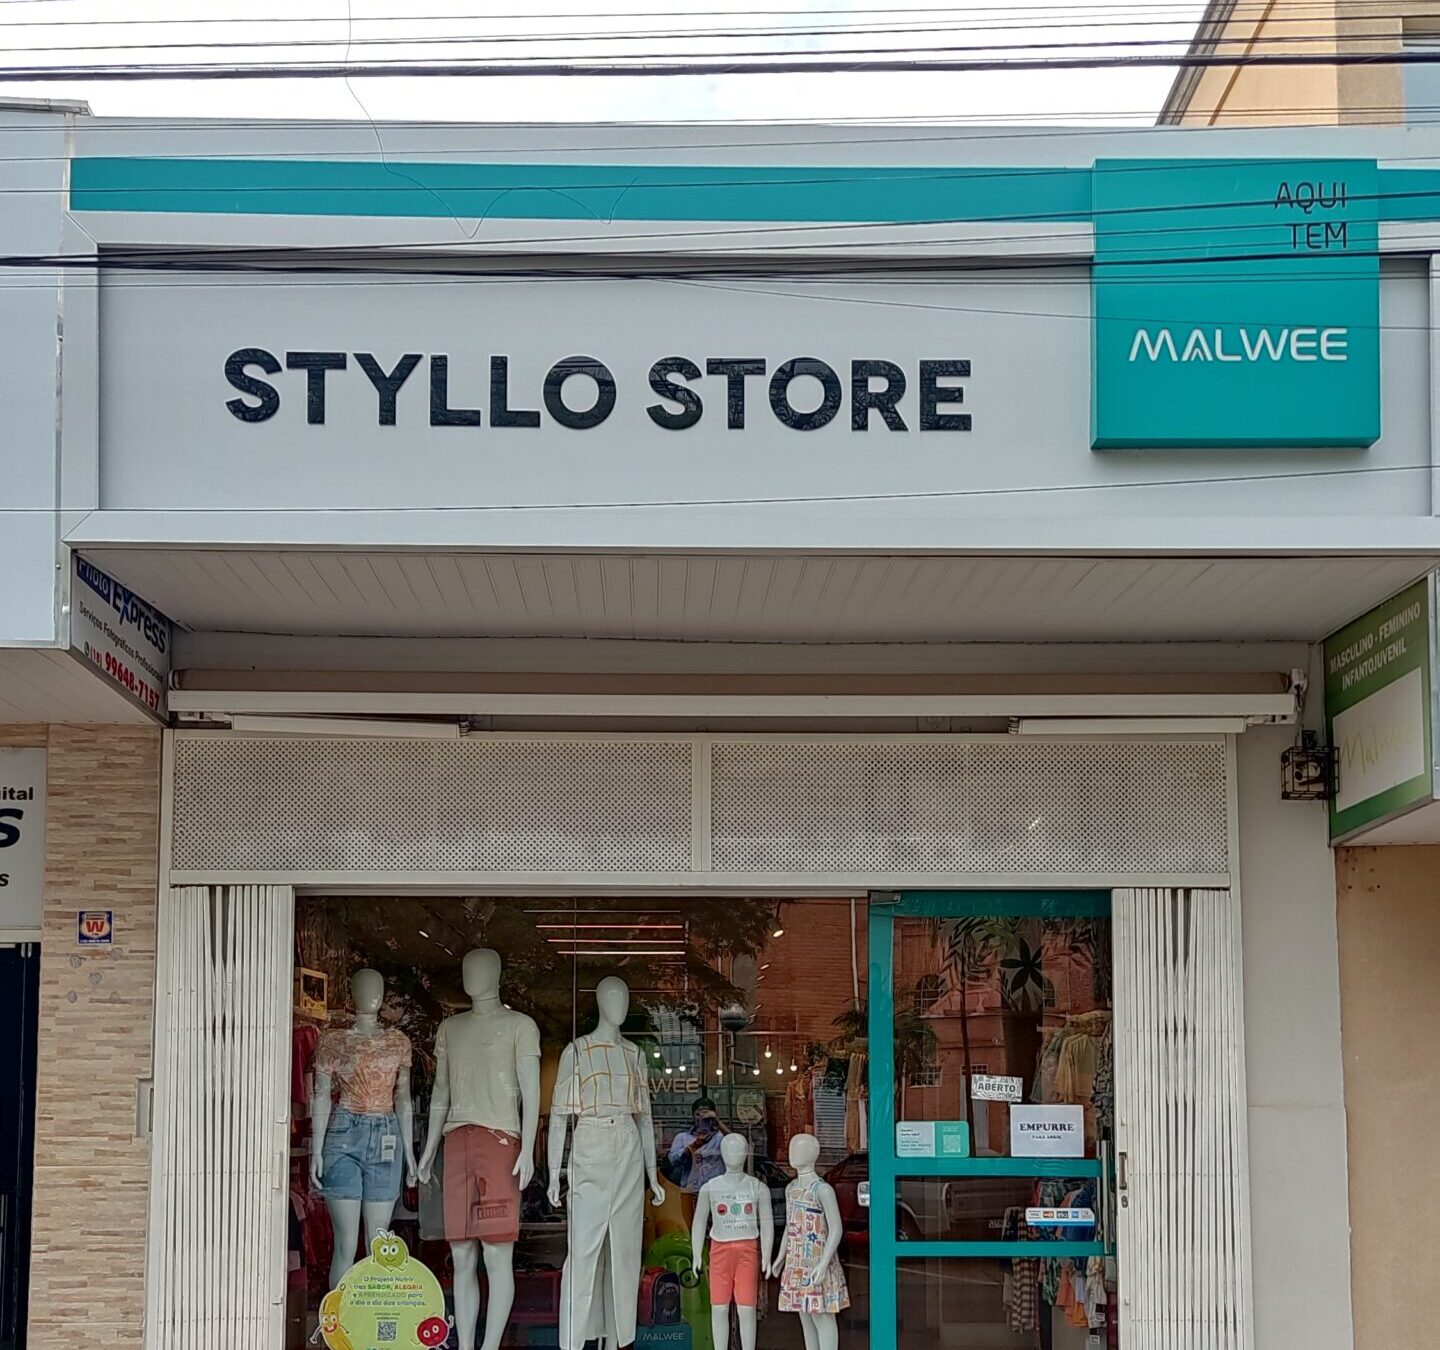 Styllo Store Malwee Buritama